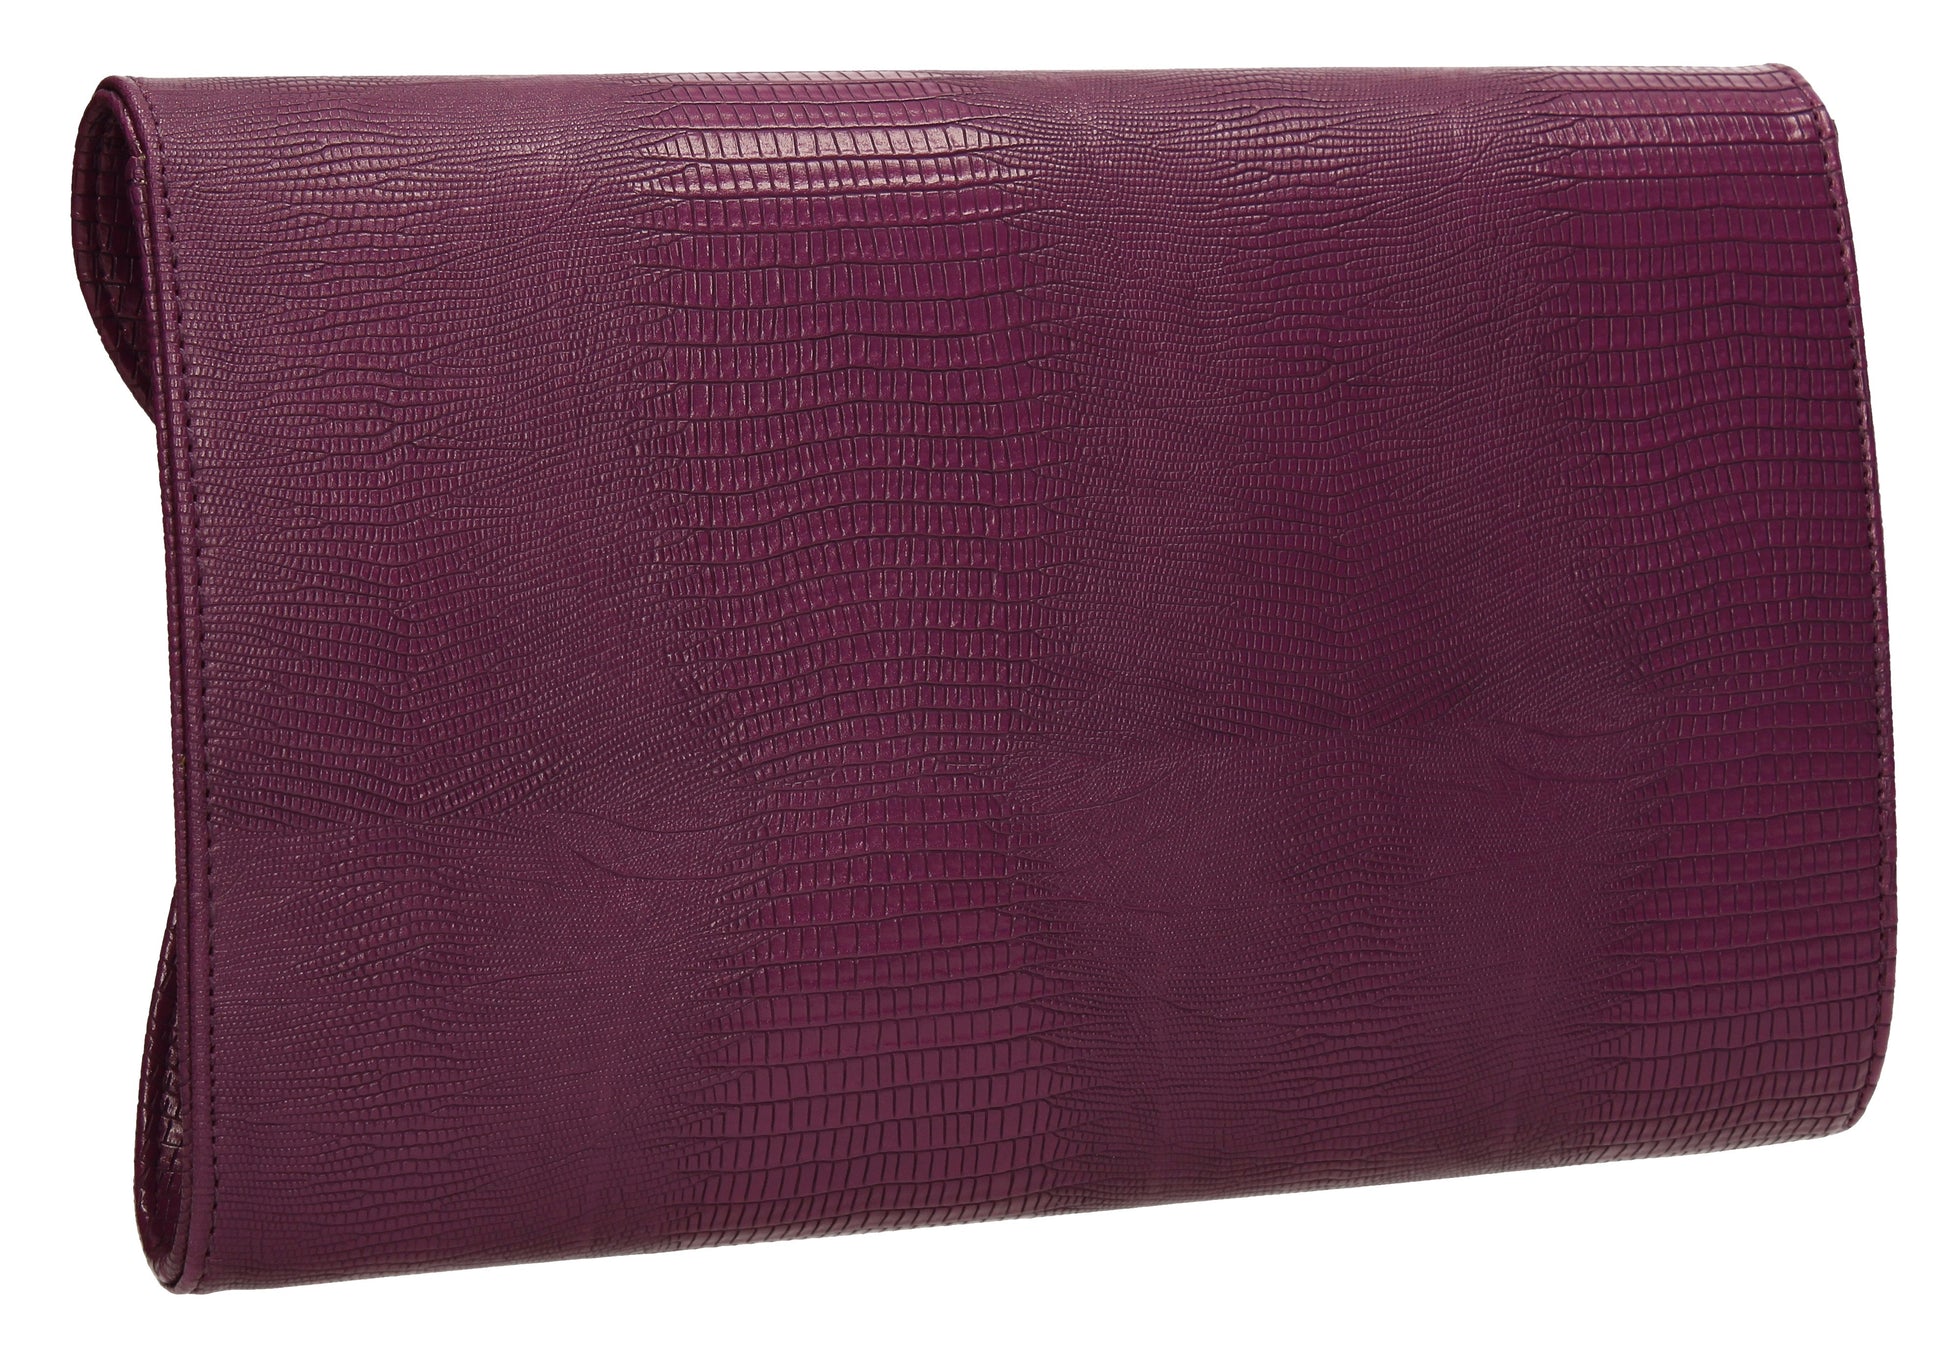 SWANKYSWANS Lauren Clutch Bag Purple Cute Cheap Clutch Bag For Weddings School and Work